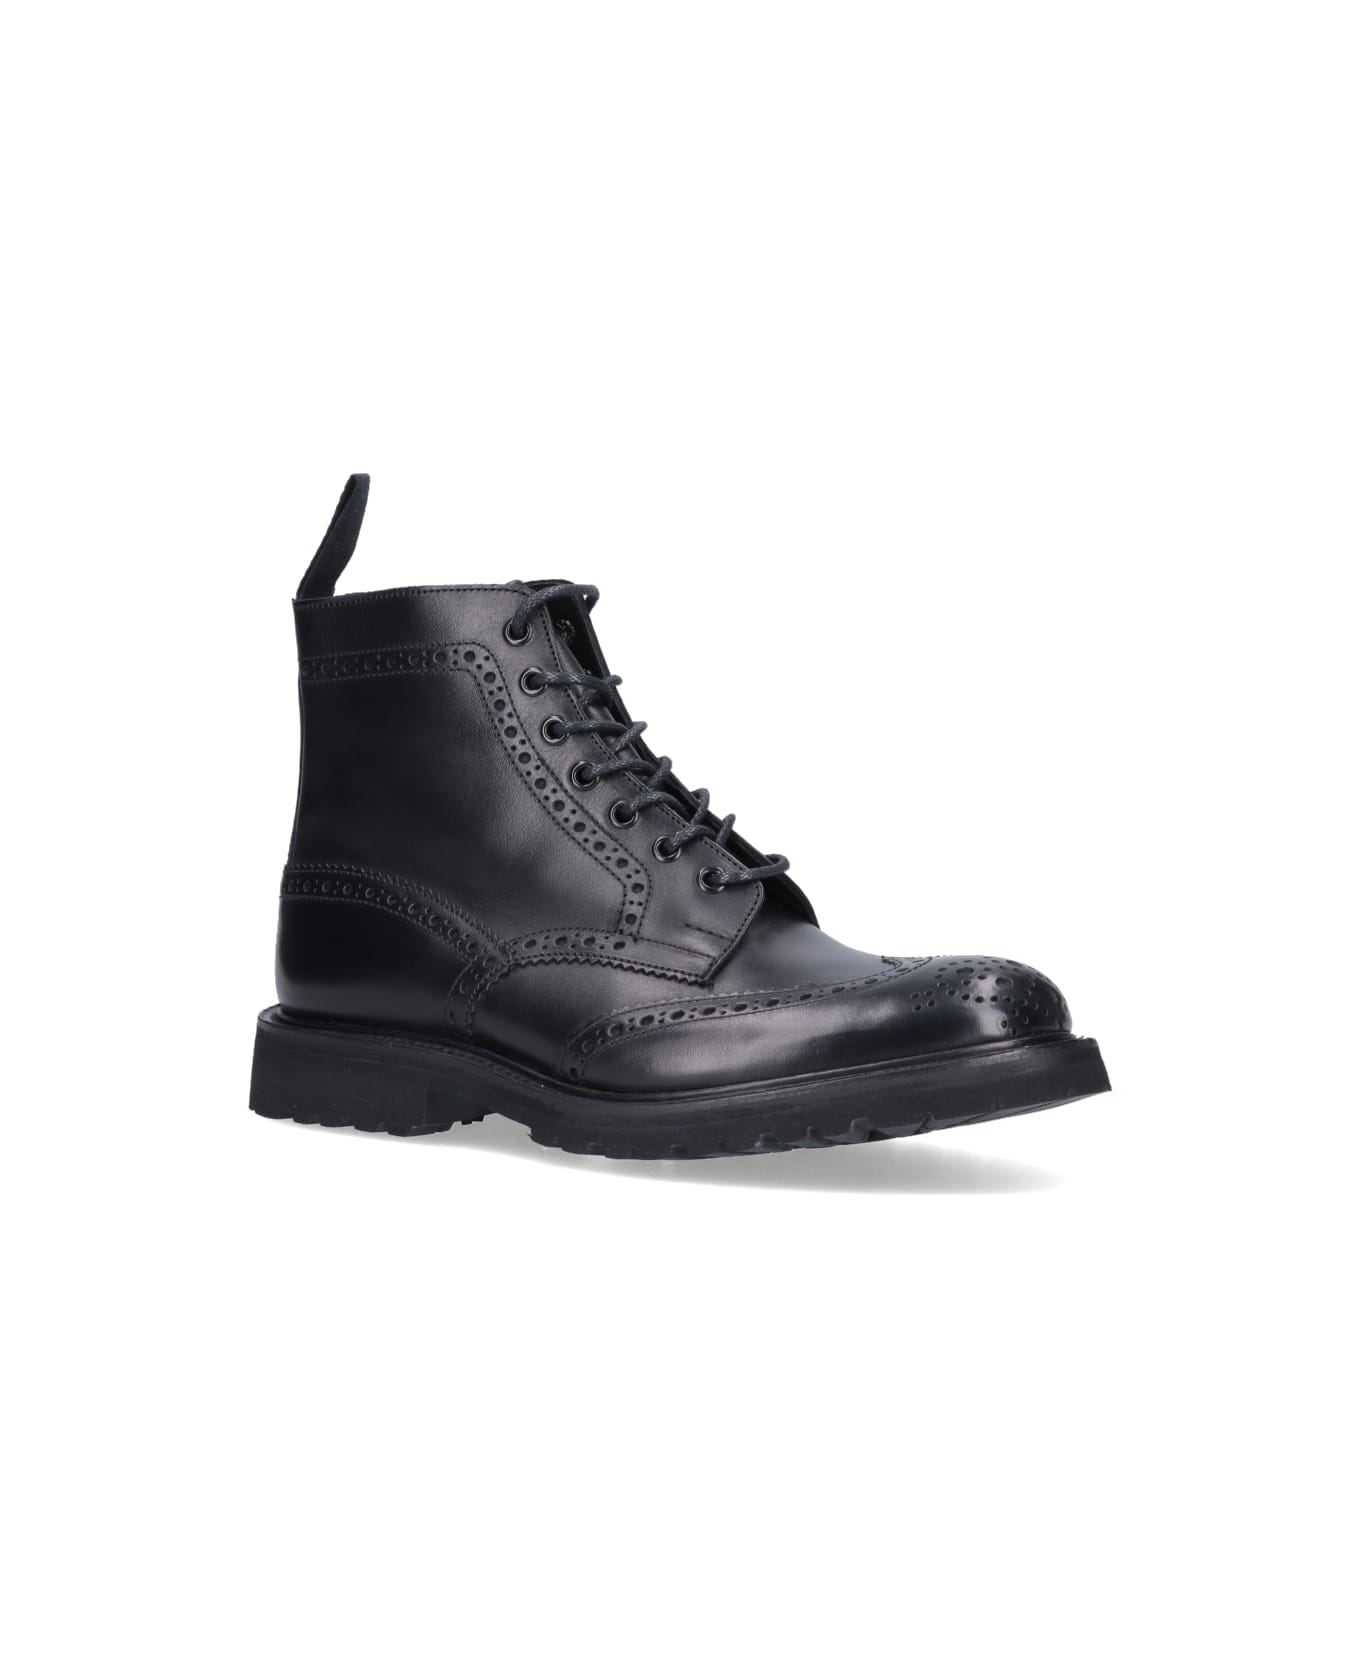 Tricker's Boots - Black